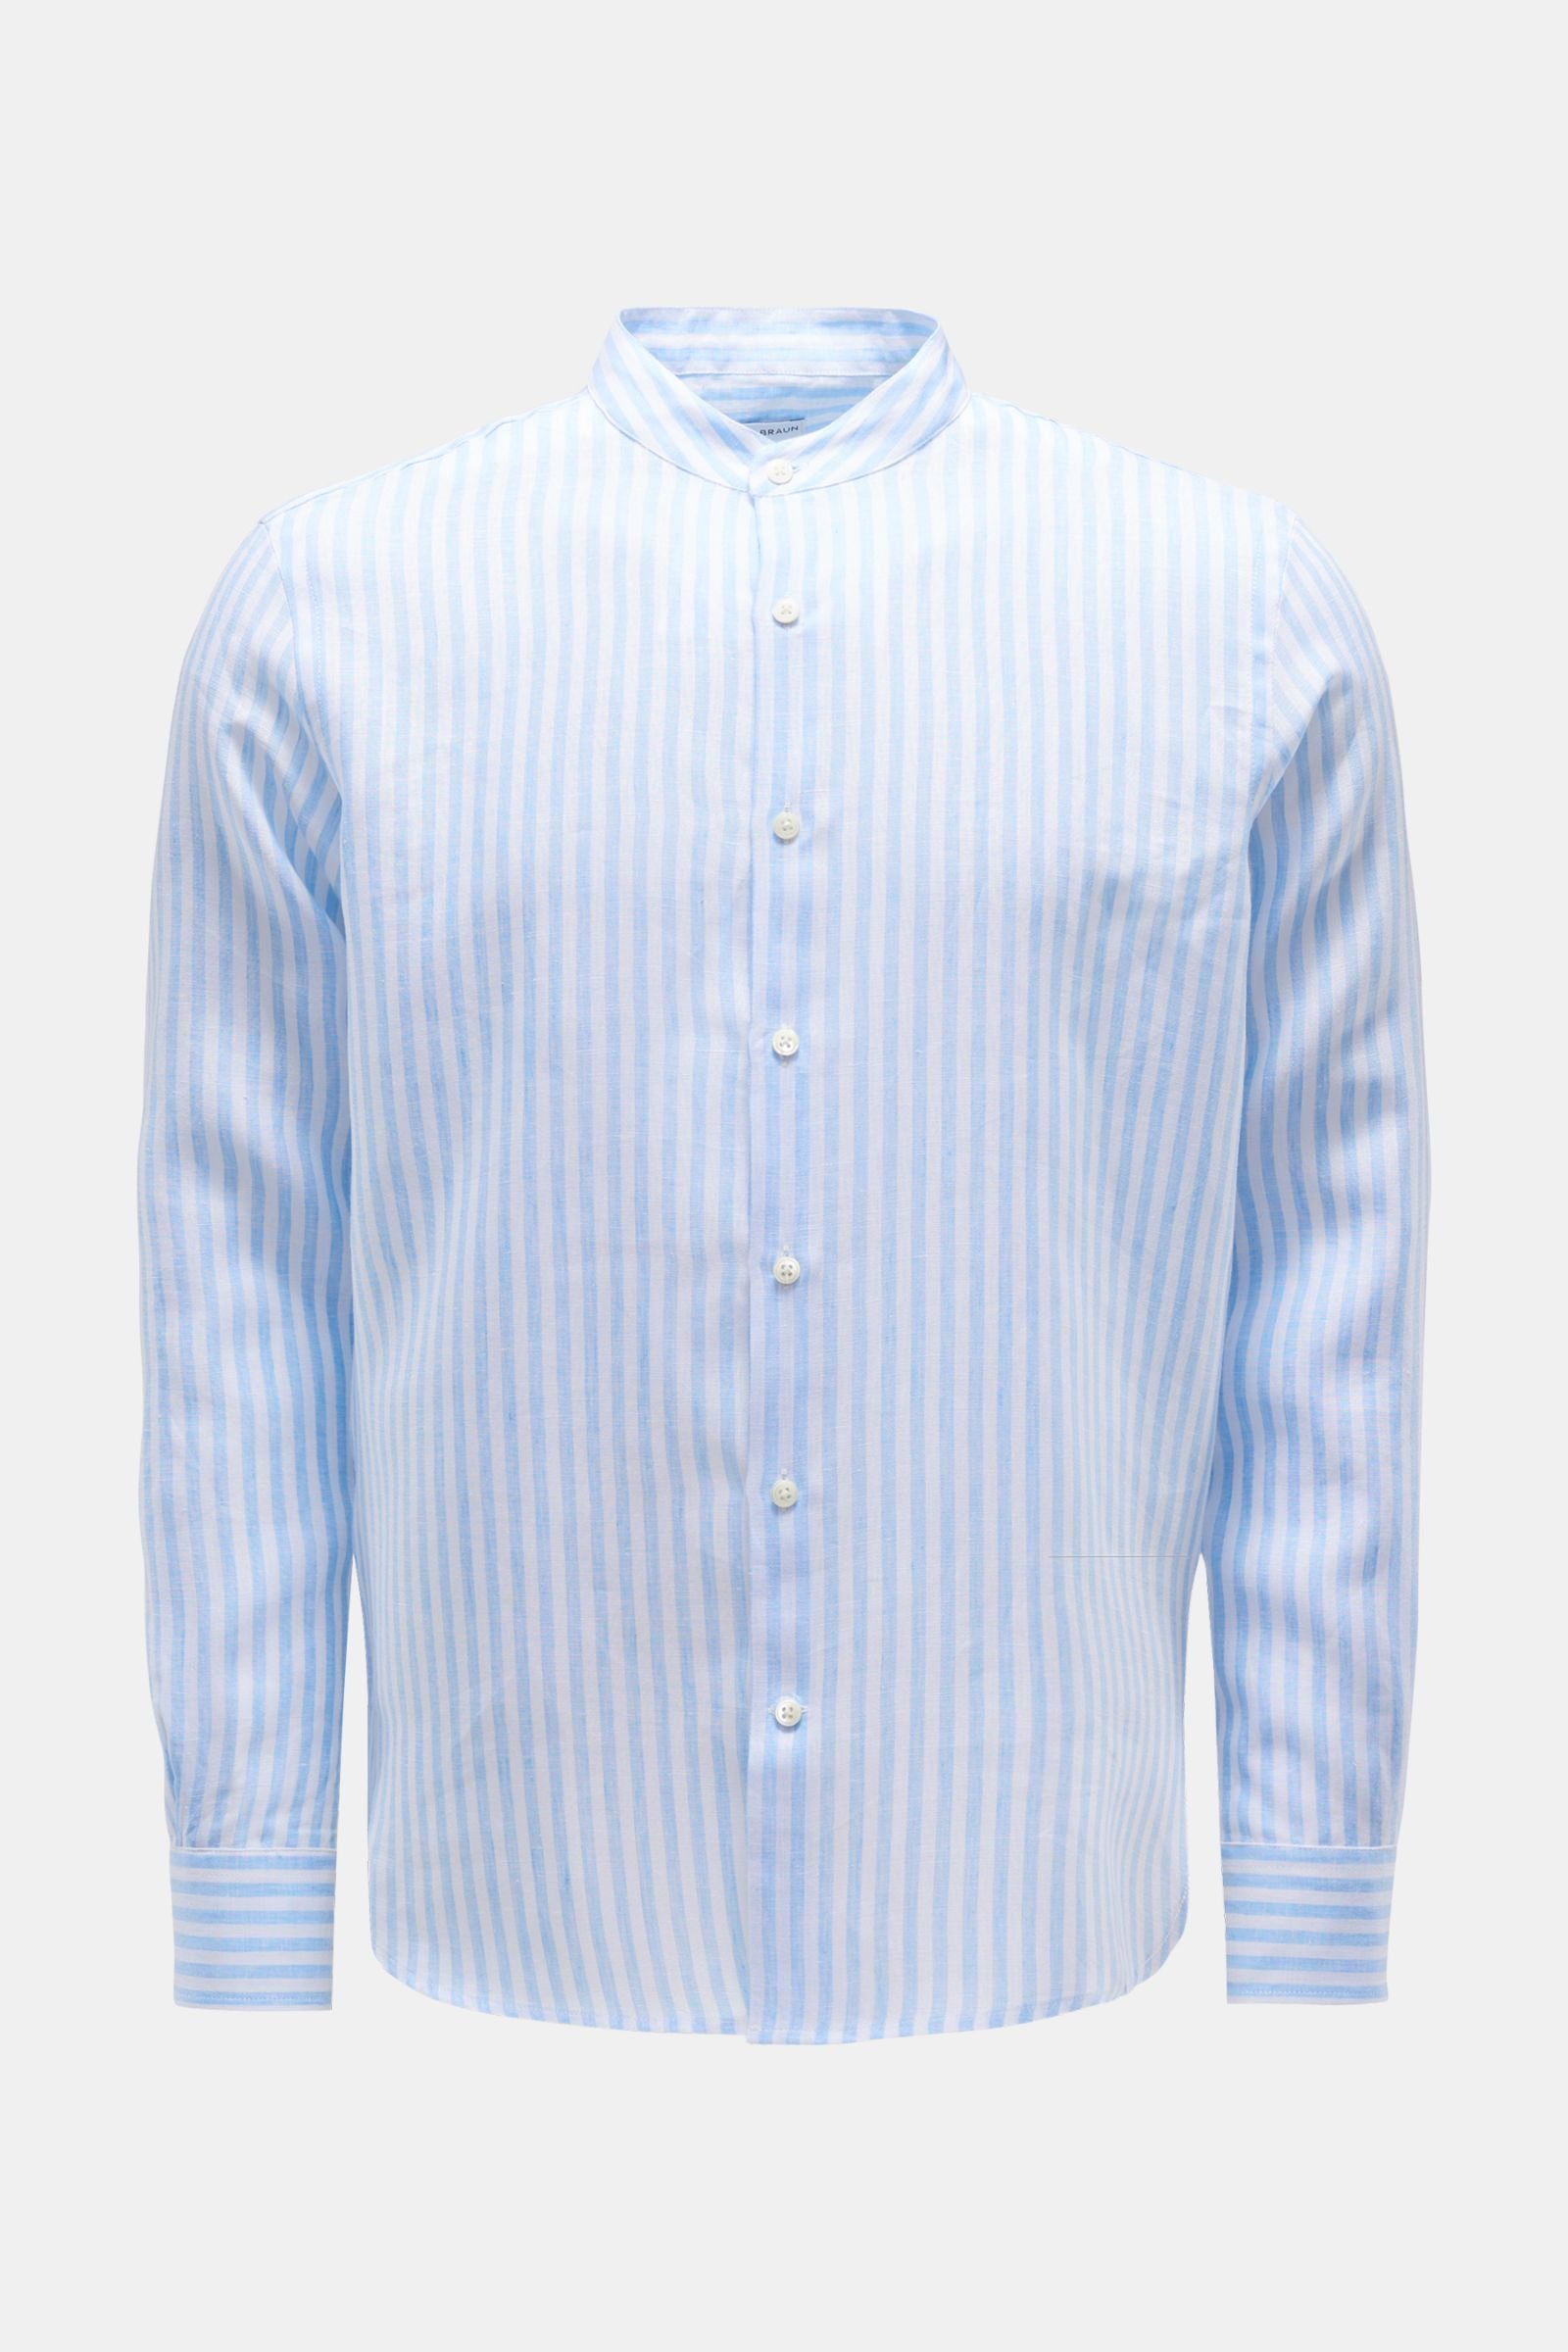 Linen shirt grandad collar light blue/white striped